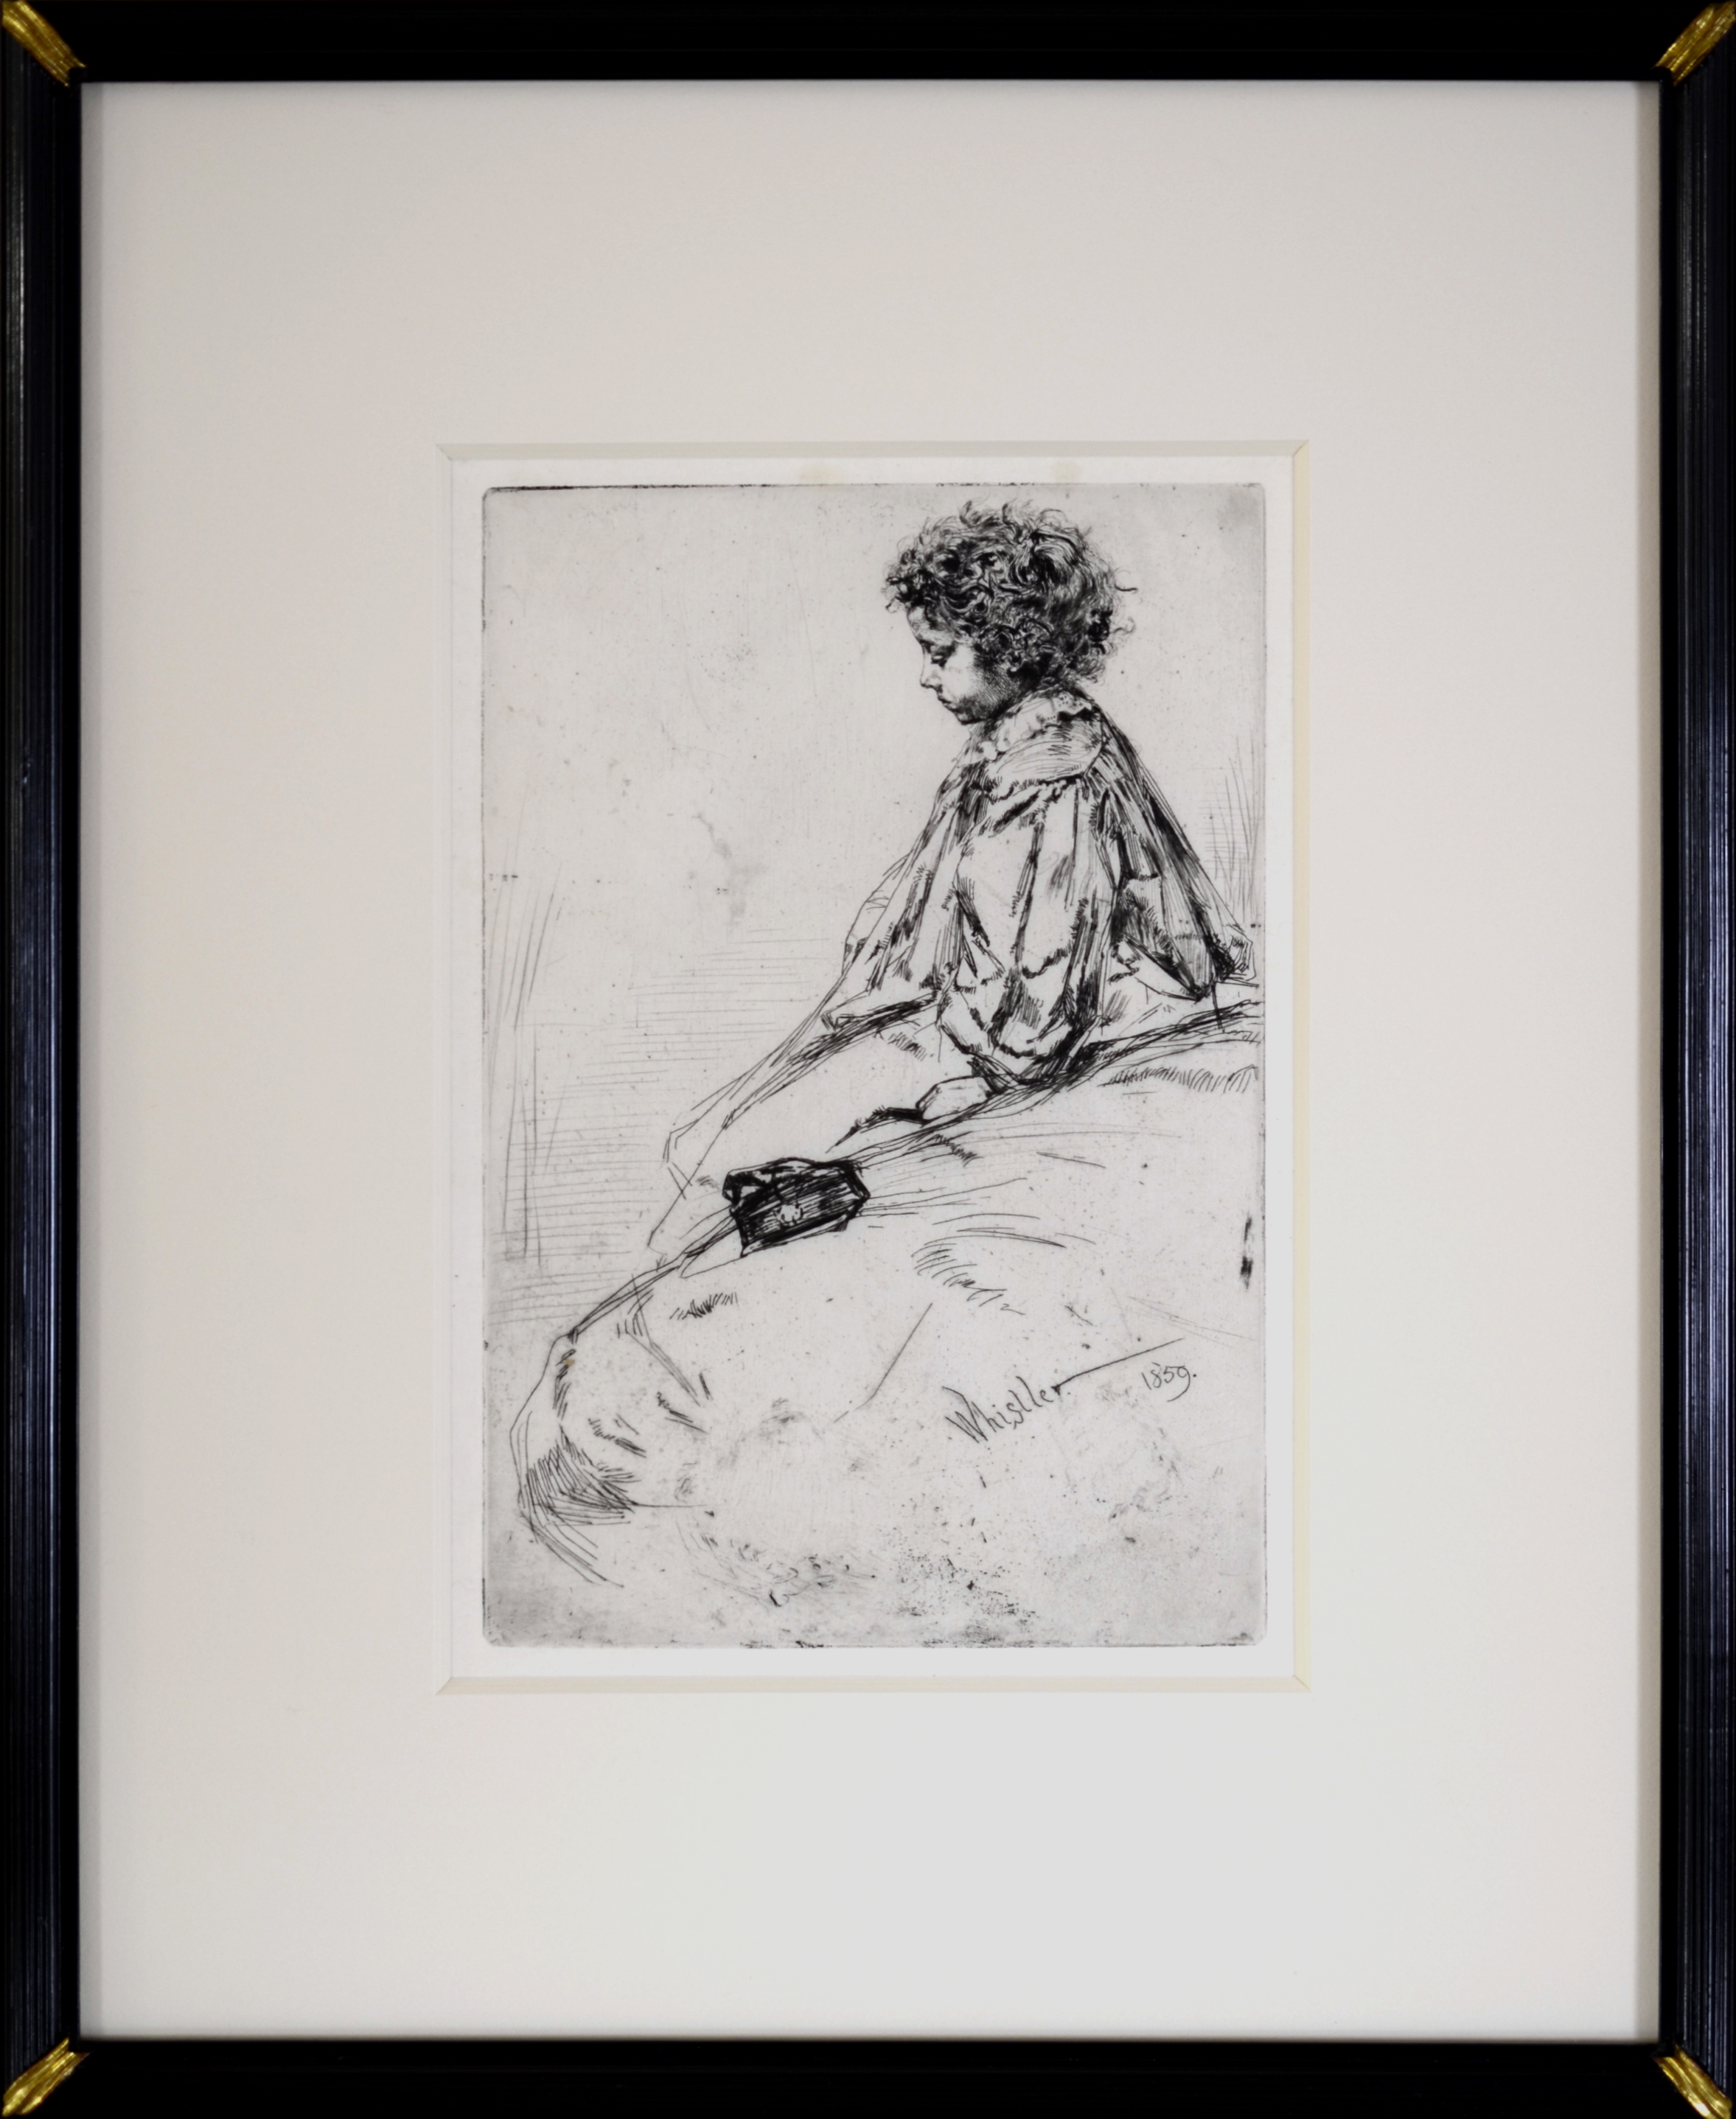 James Abbott McNeill Whistler artwork restored by Oliver Brothers